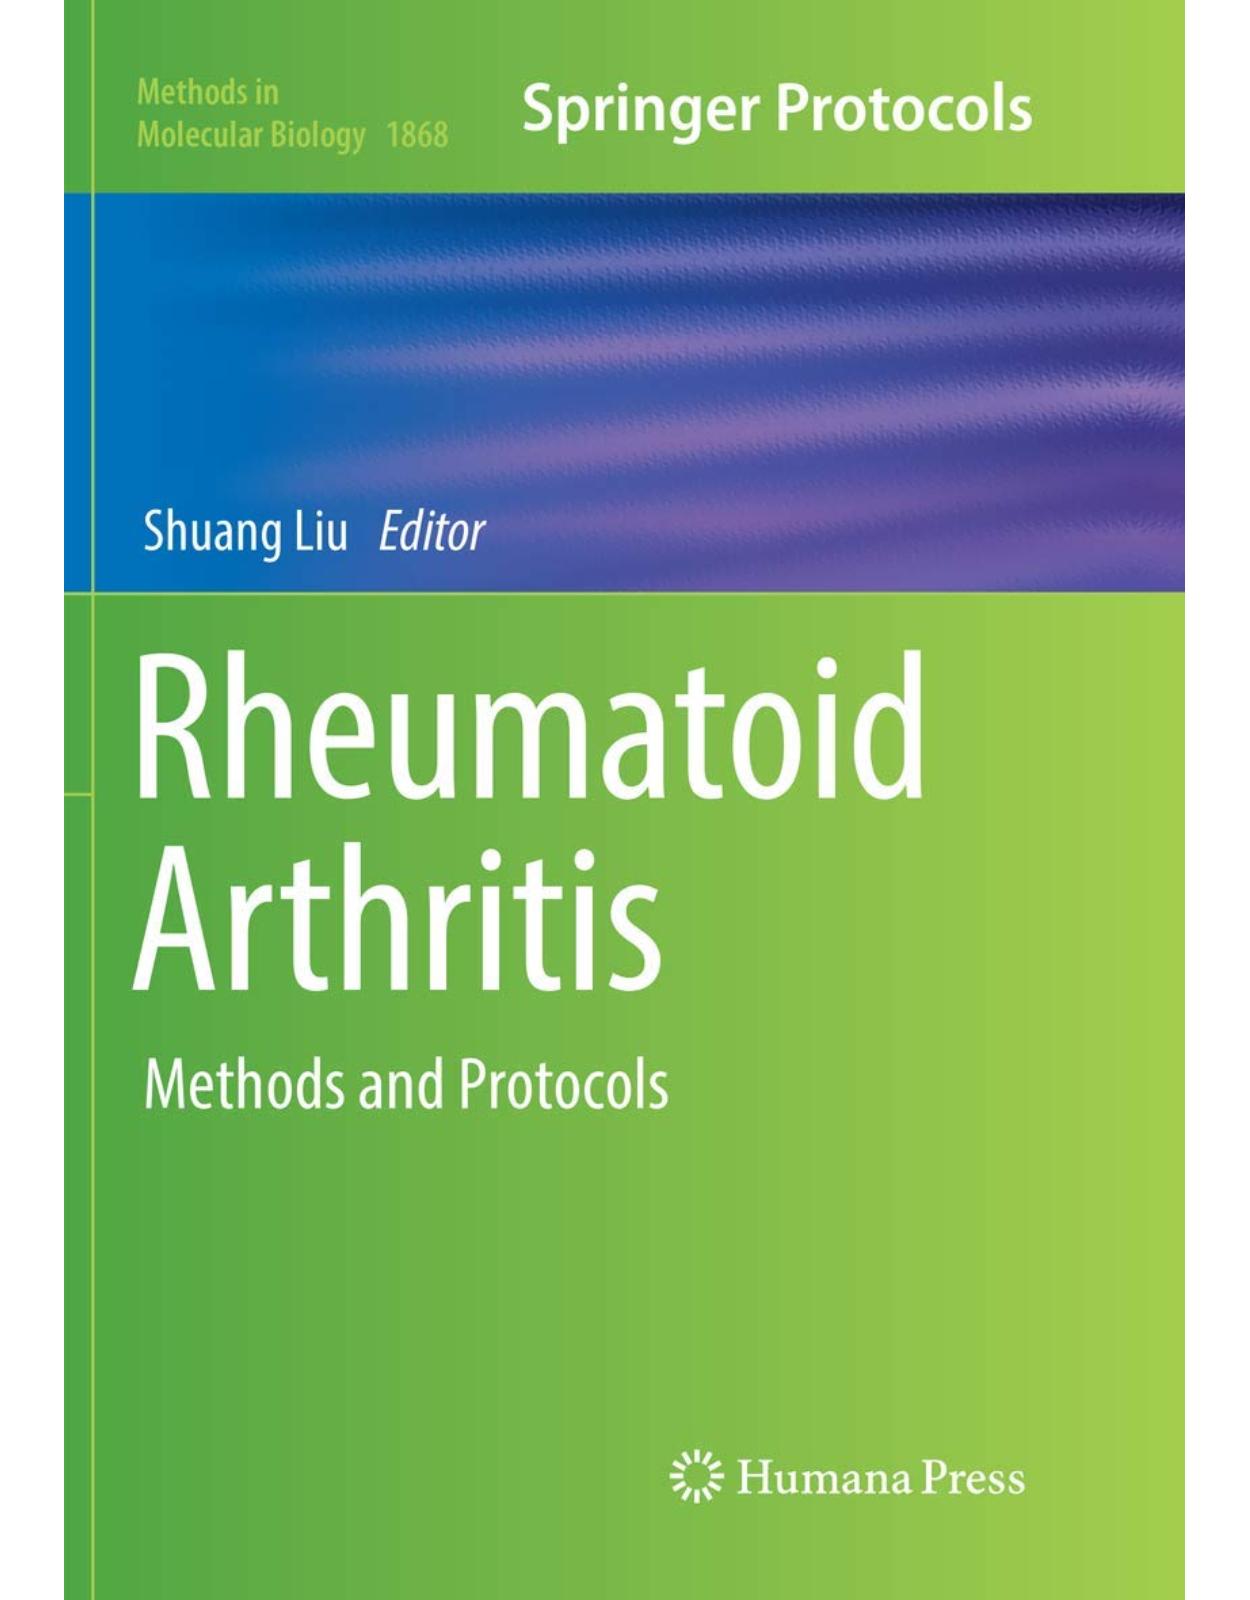 Rheumatoid Arthritis: Methods and Protocols: 1868 (Methods in Molecular Biology) 